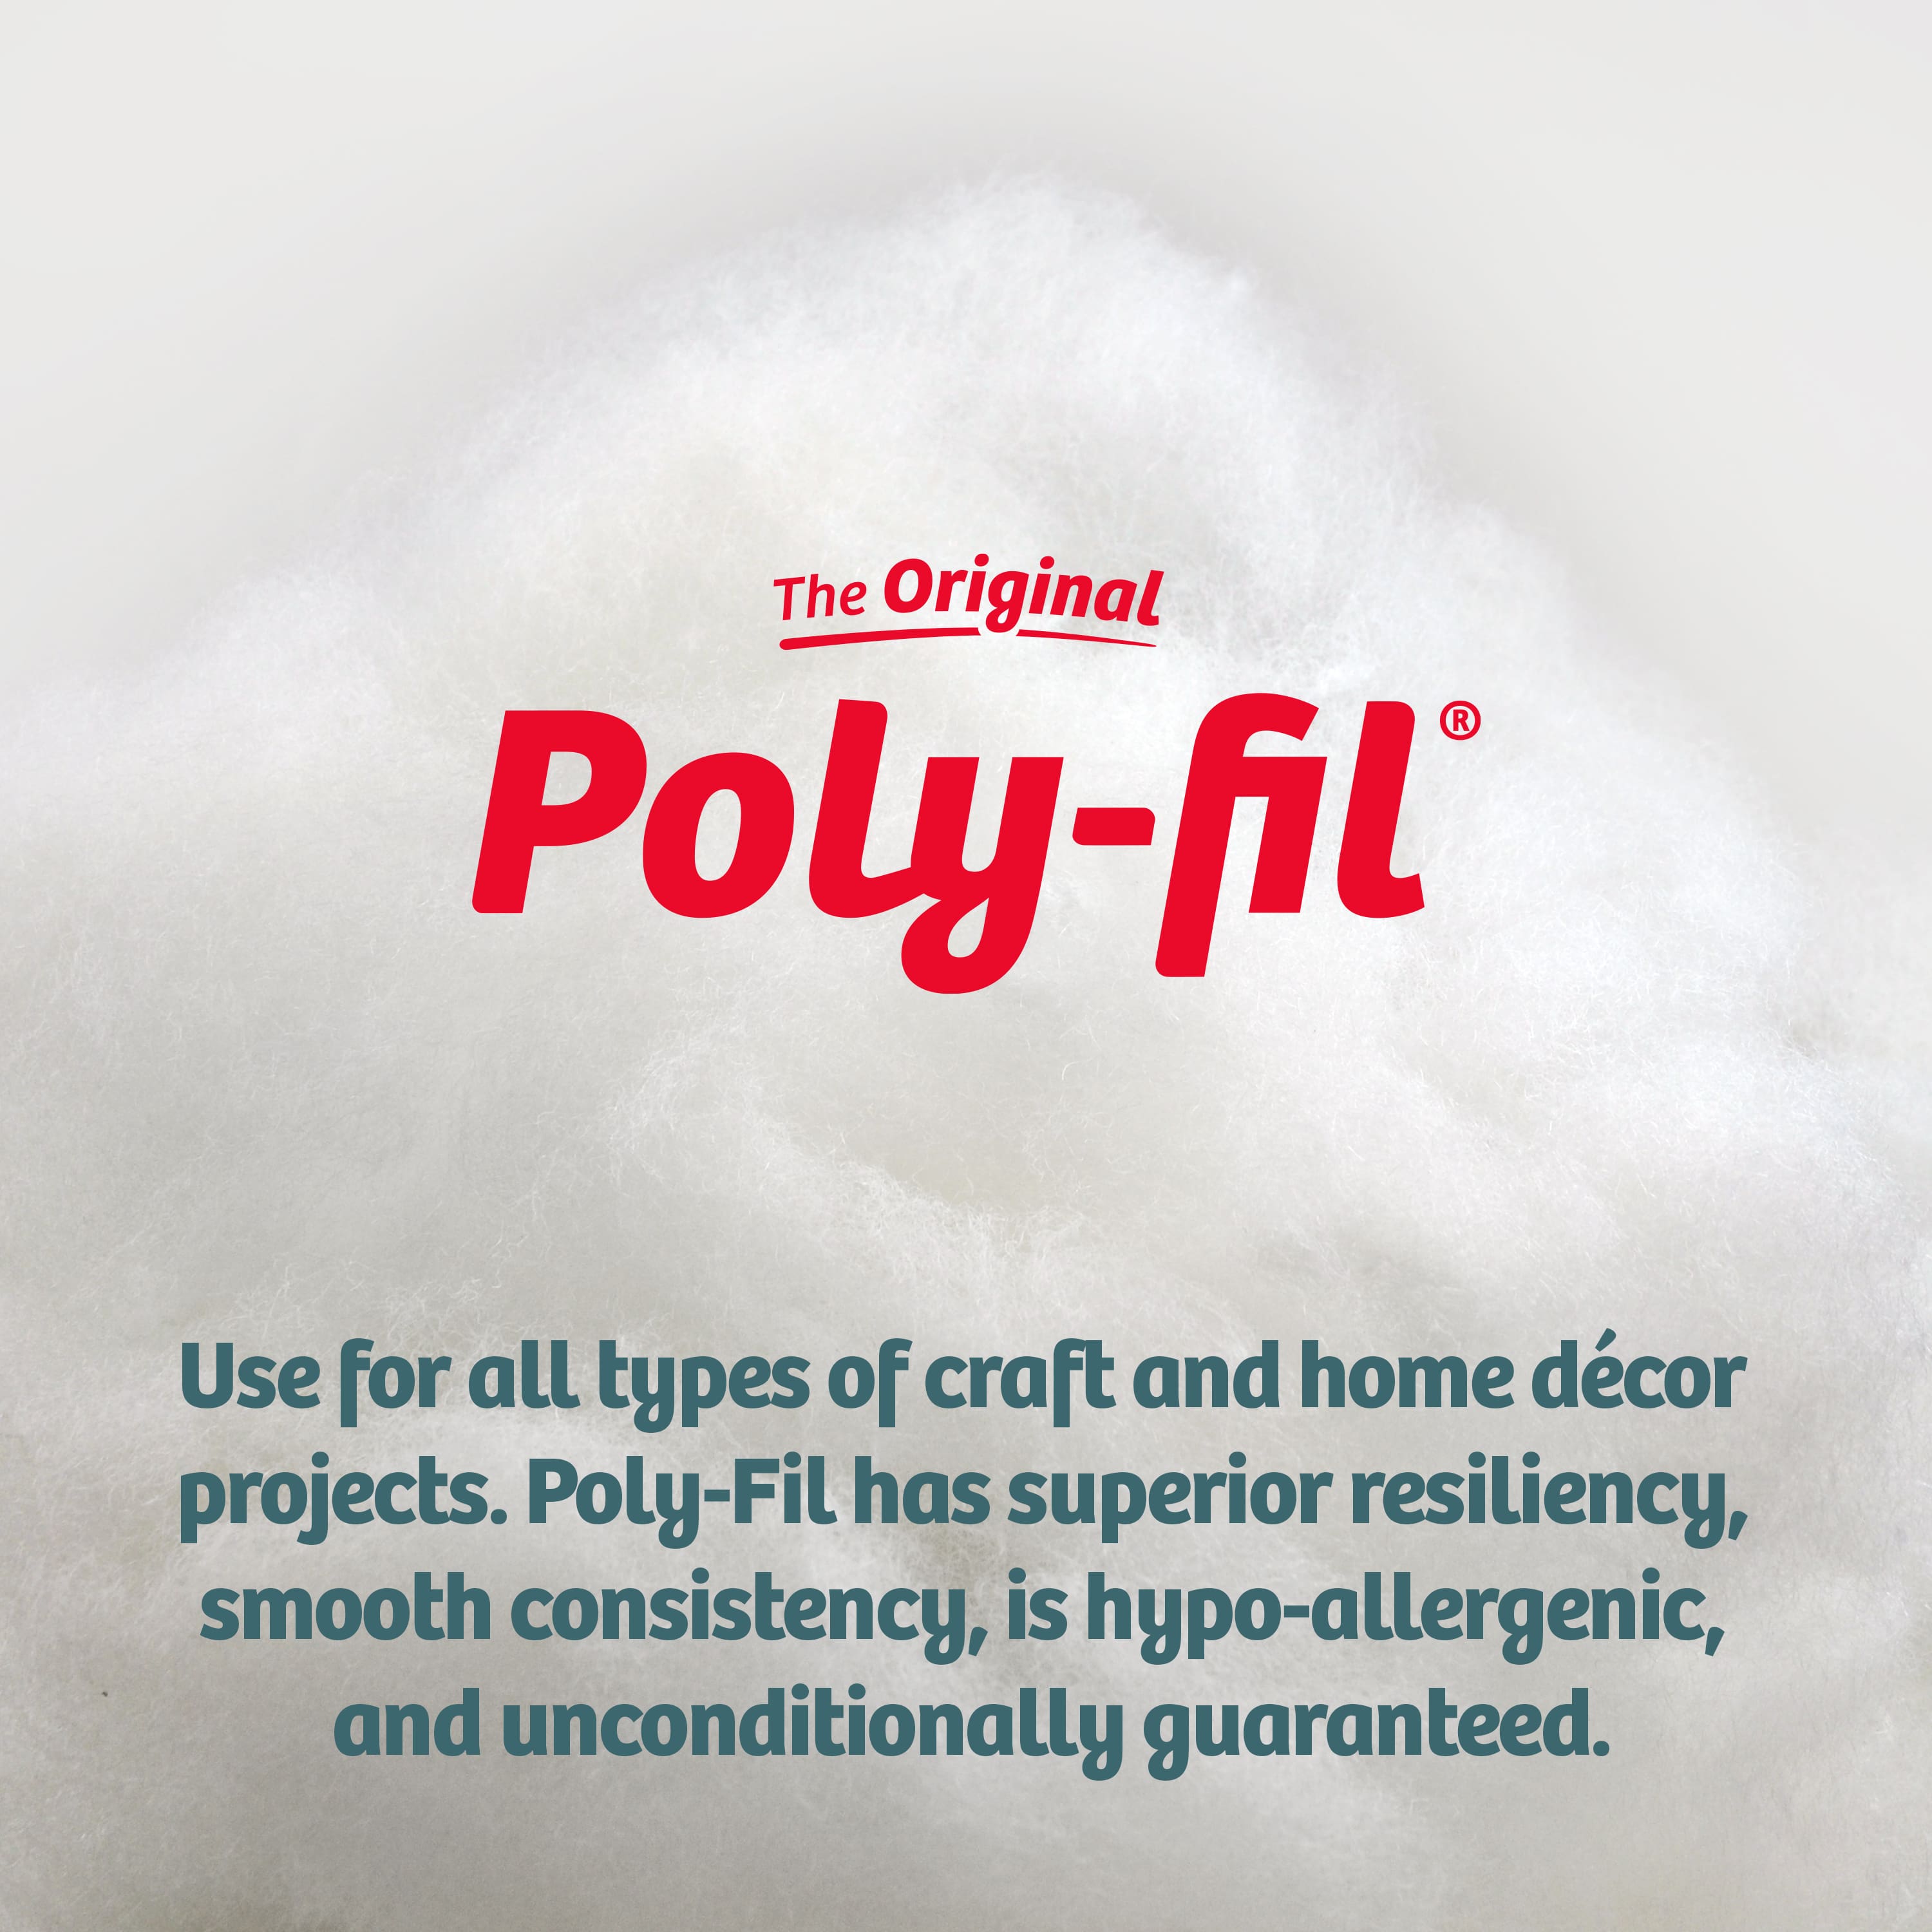 Poly-Fil Premium Polyester Fiber Fill - 20 oz